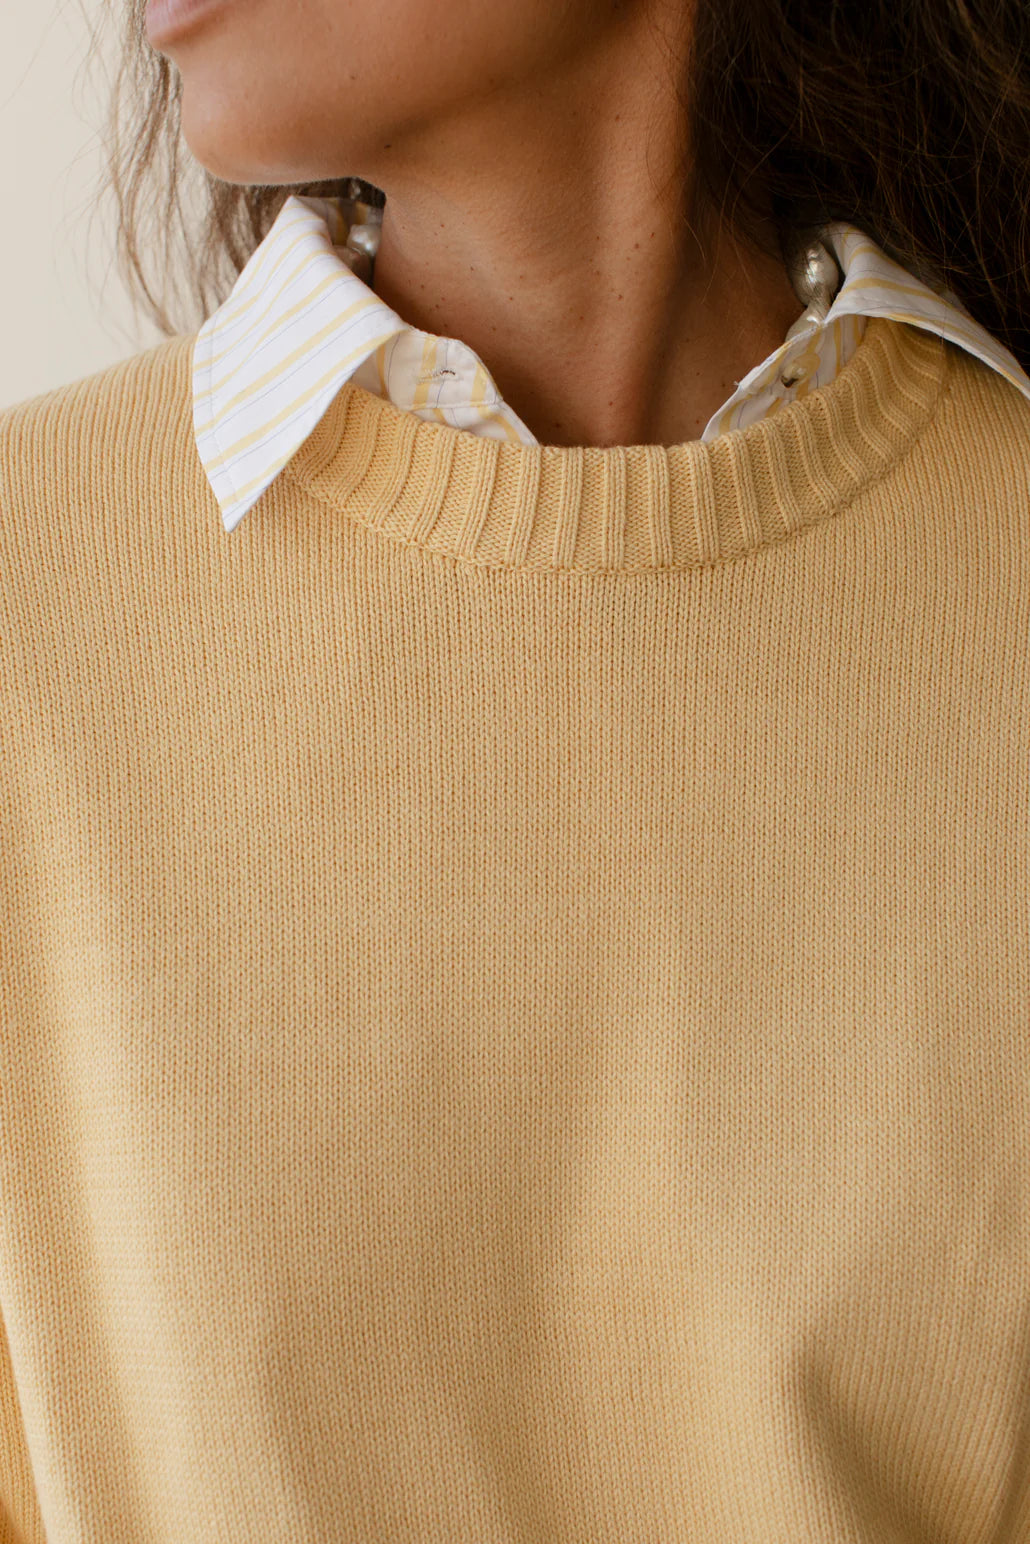 DONNI. The Cotton Knit Crewneck Sweater